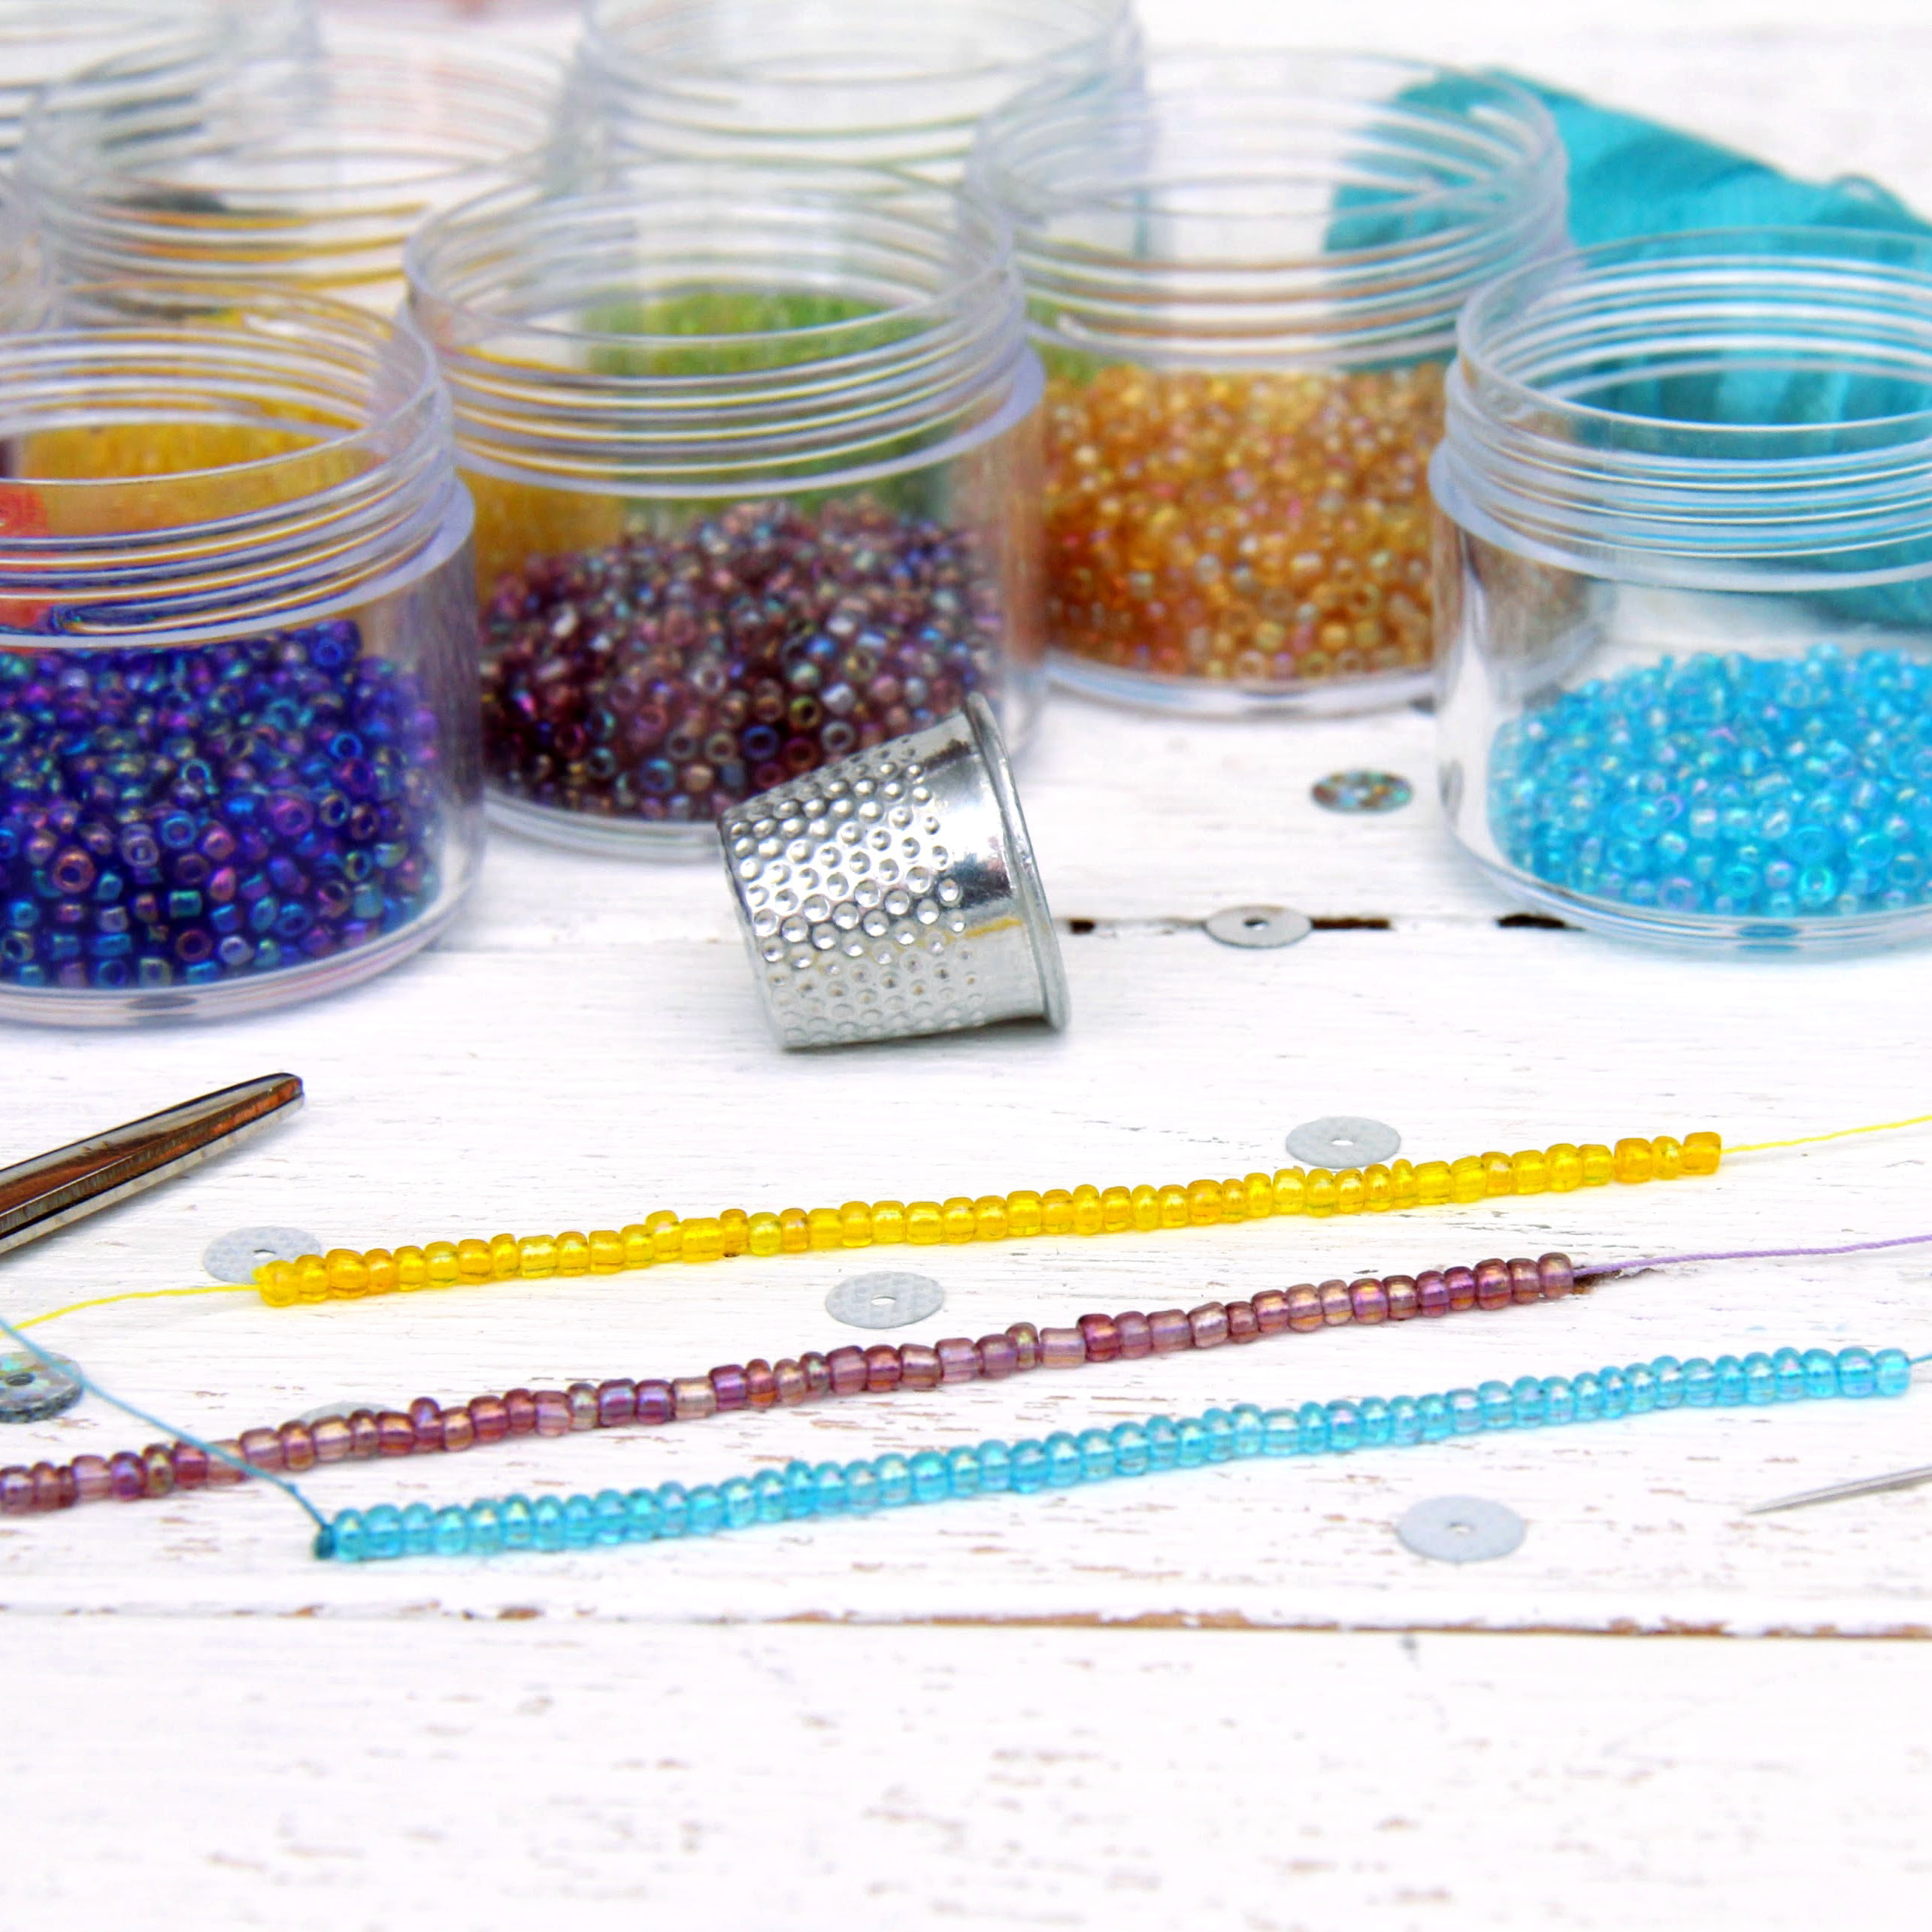 Colorful Assortment Glass Beads Needles Thread Stock Photo 112937758